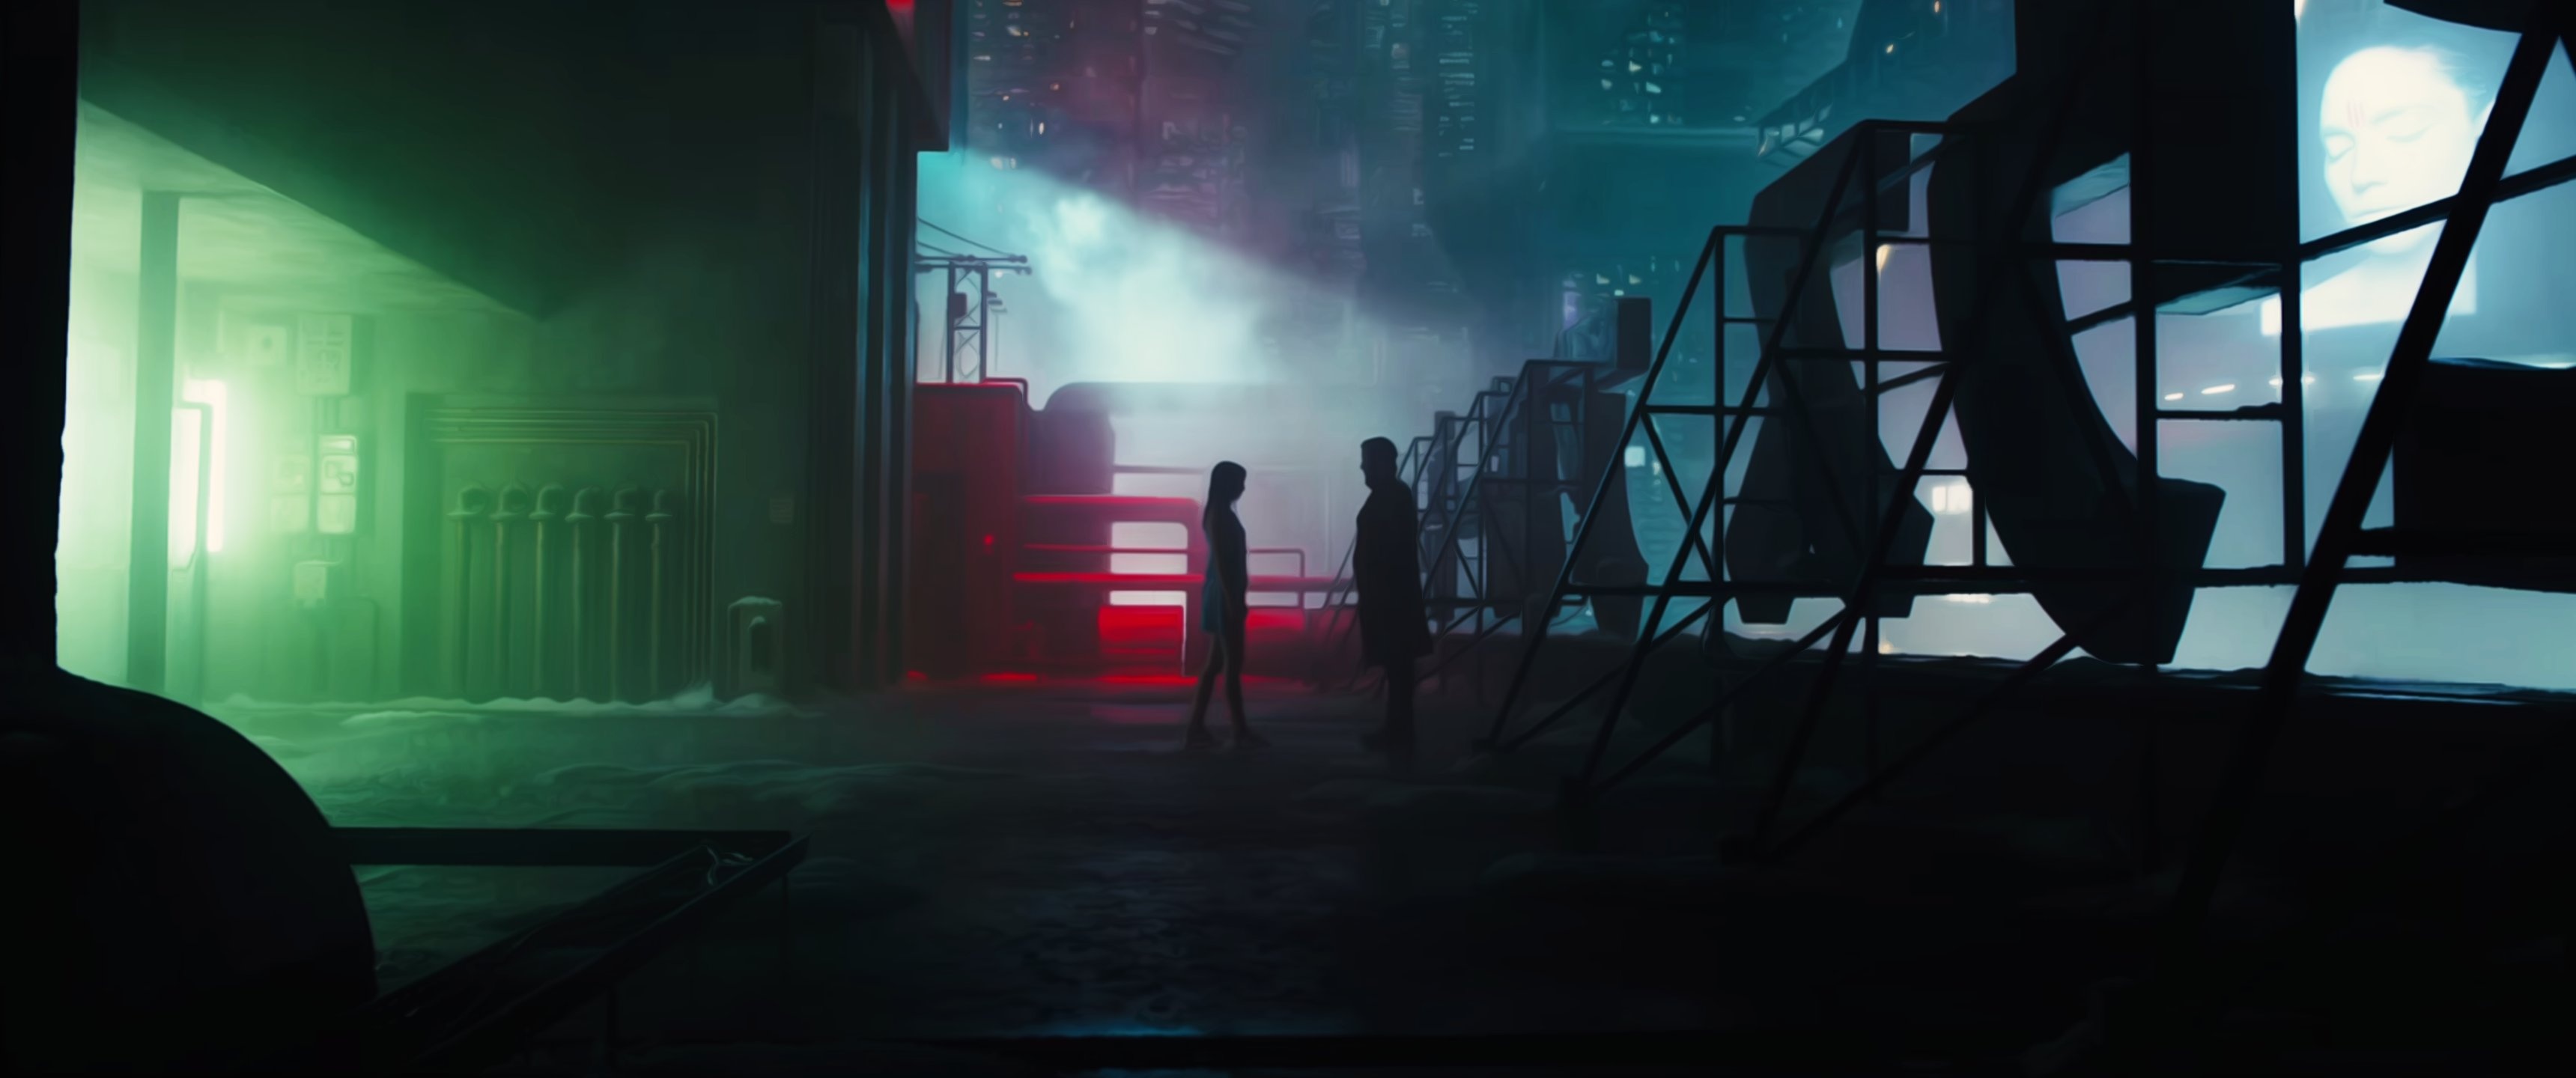 Blade Runner 2049 artwork, 4K HD resolution, Atmospheric sci-fi, Imagination unleashed, 3440x1440 Dual Screen Desktop